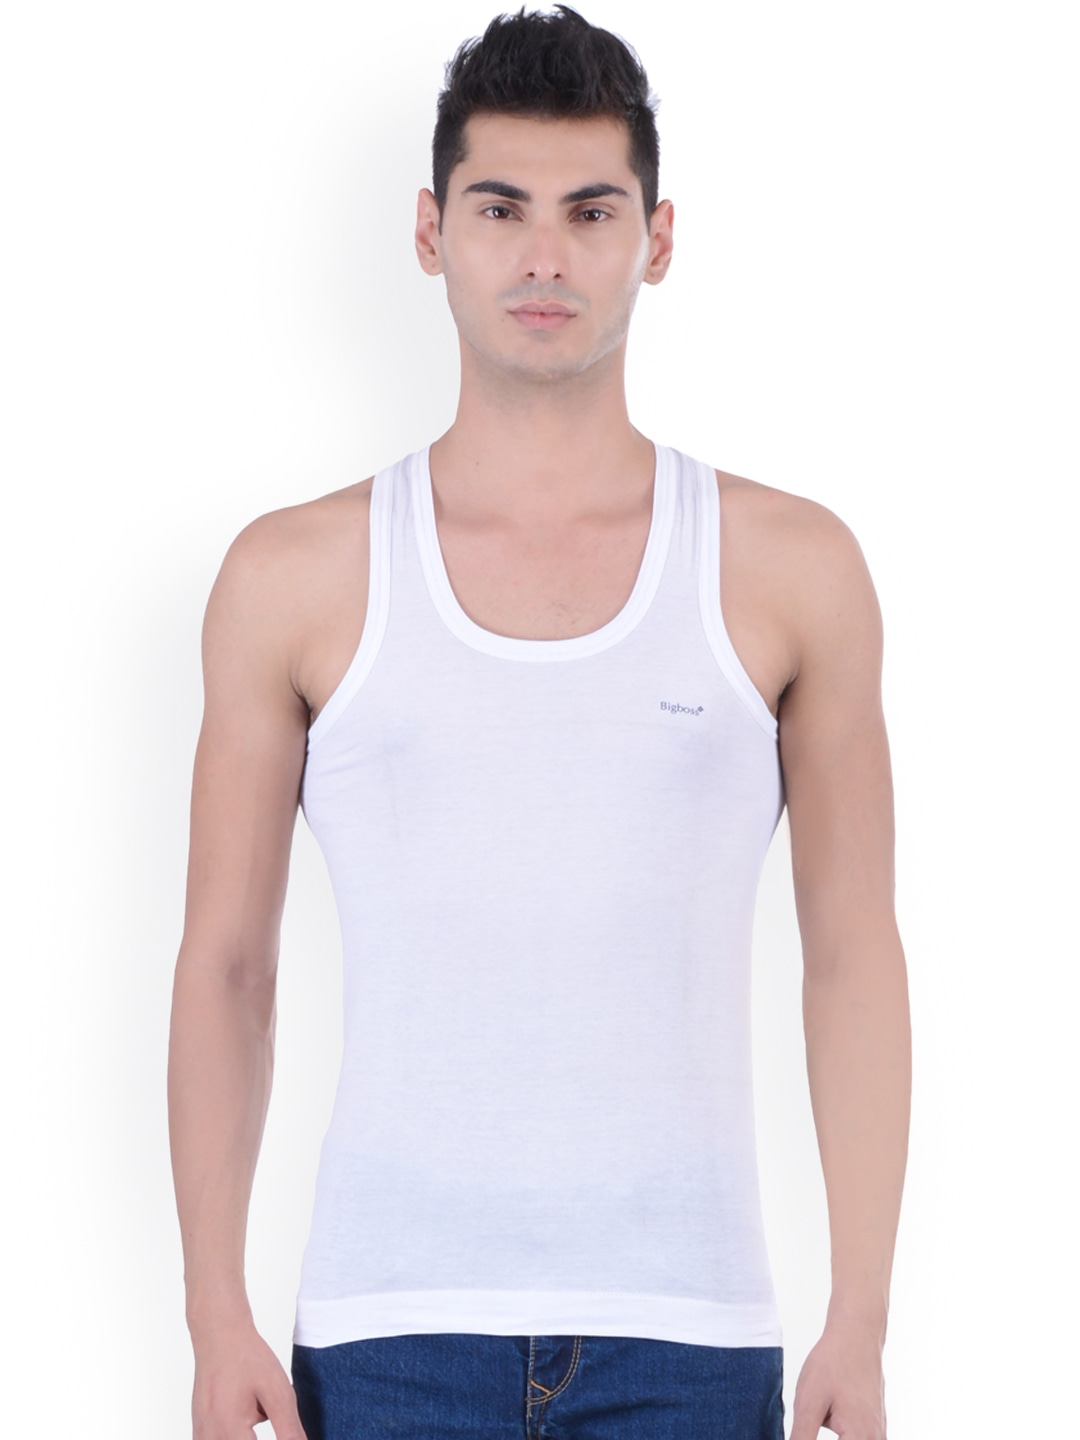 Clothing Innerwear Vests | Dollar Bigboss Pack of 6 White Innerwear Vests MDVE-01-R1-PO6 - NT70401